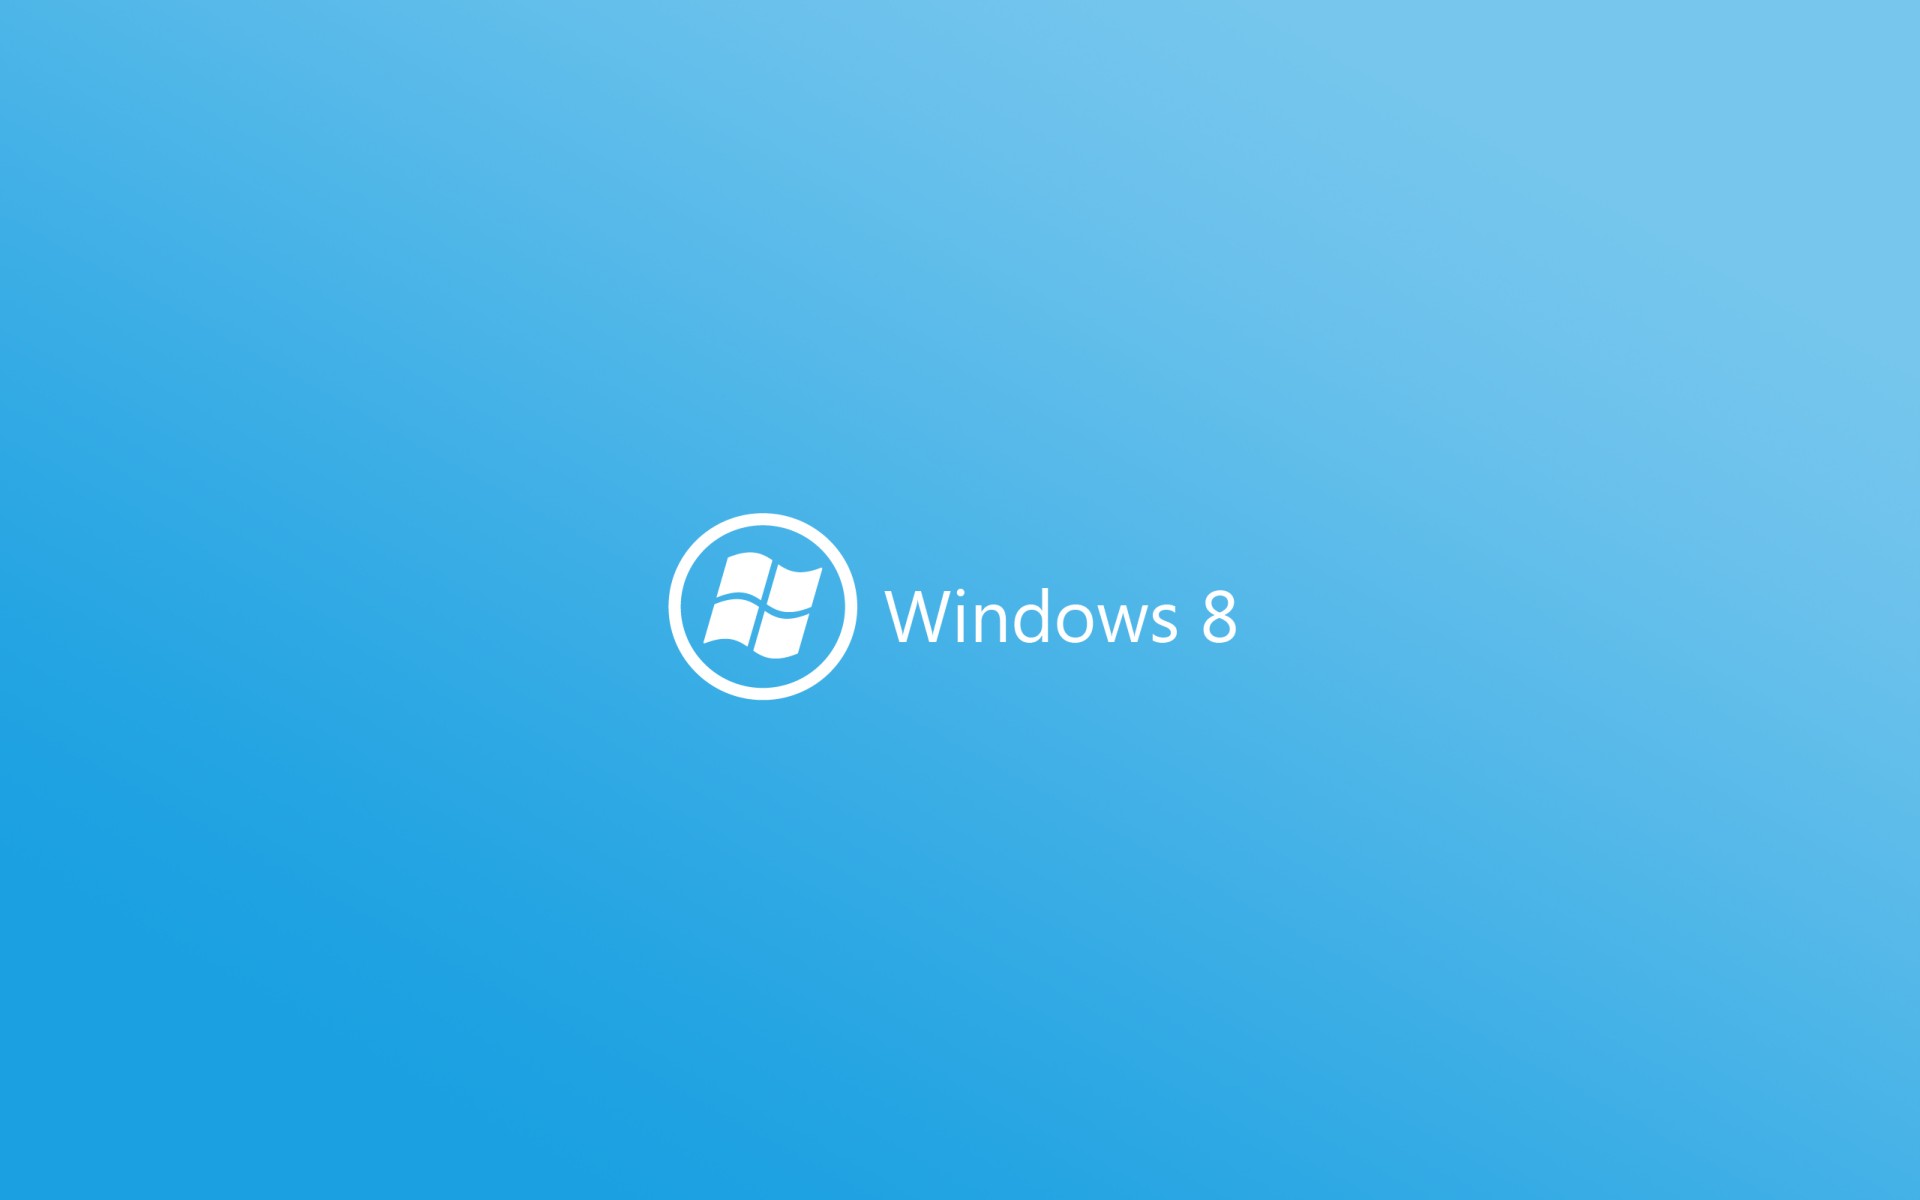 Windows 8 Wallpaper Logo on 10 Colors of Background Zon Saja 1920x1200